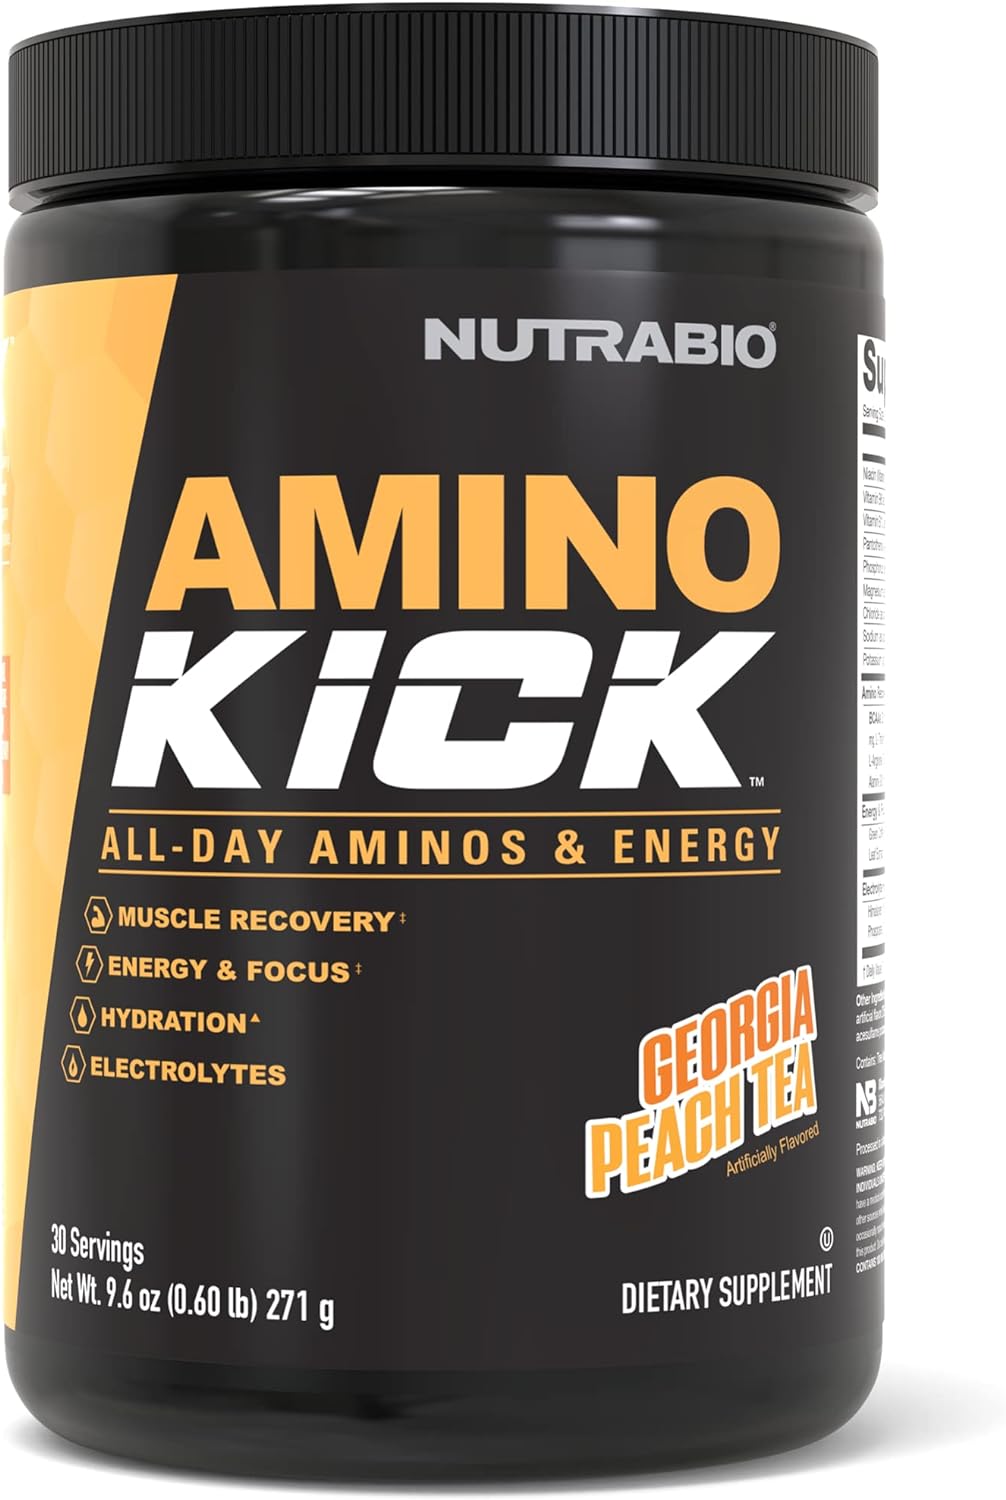 NutraBio Amino Kick - Amino Acid Energy Formula - BCAA's, Electrolytes for Hydration, Natural Caffeine- 30 Servings (Georgia Peach Tea)